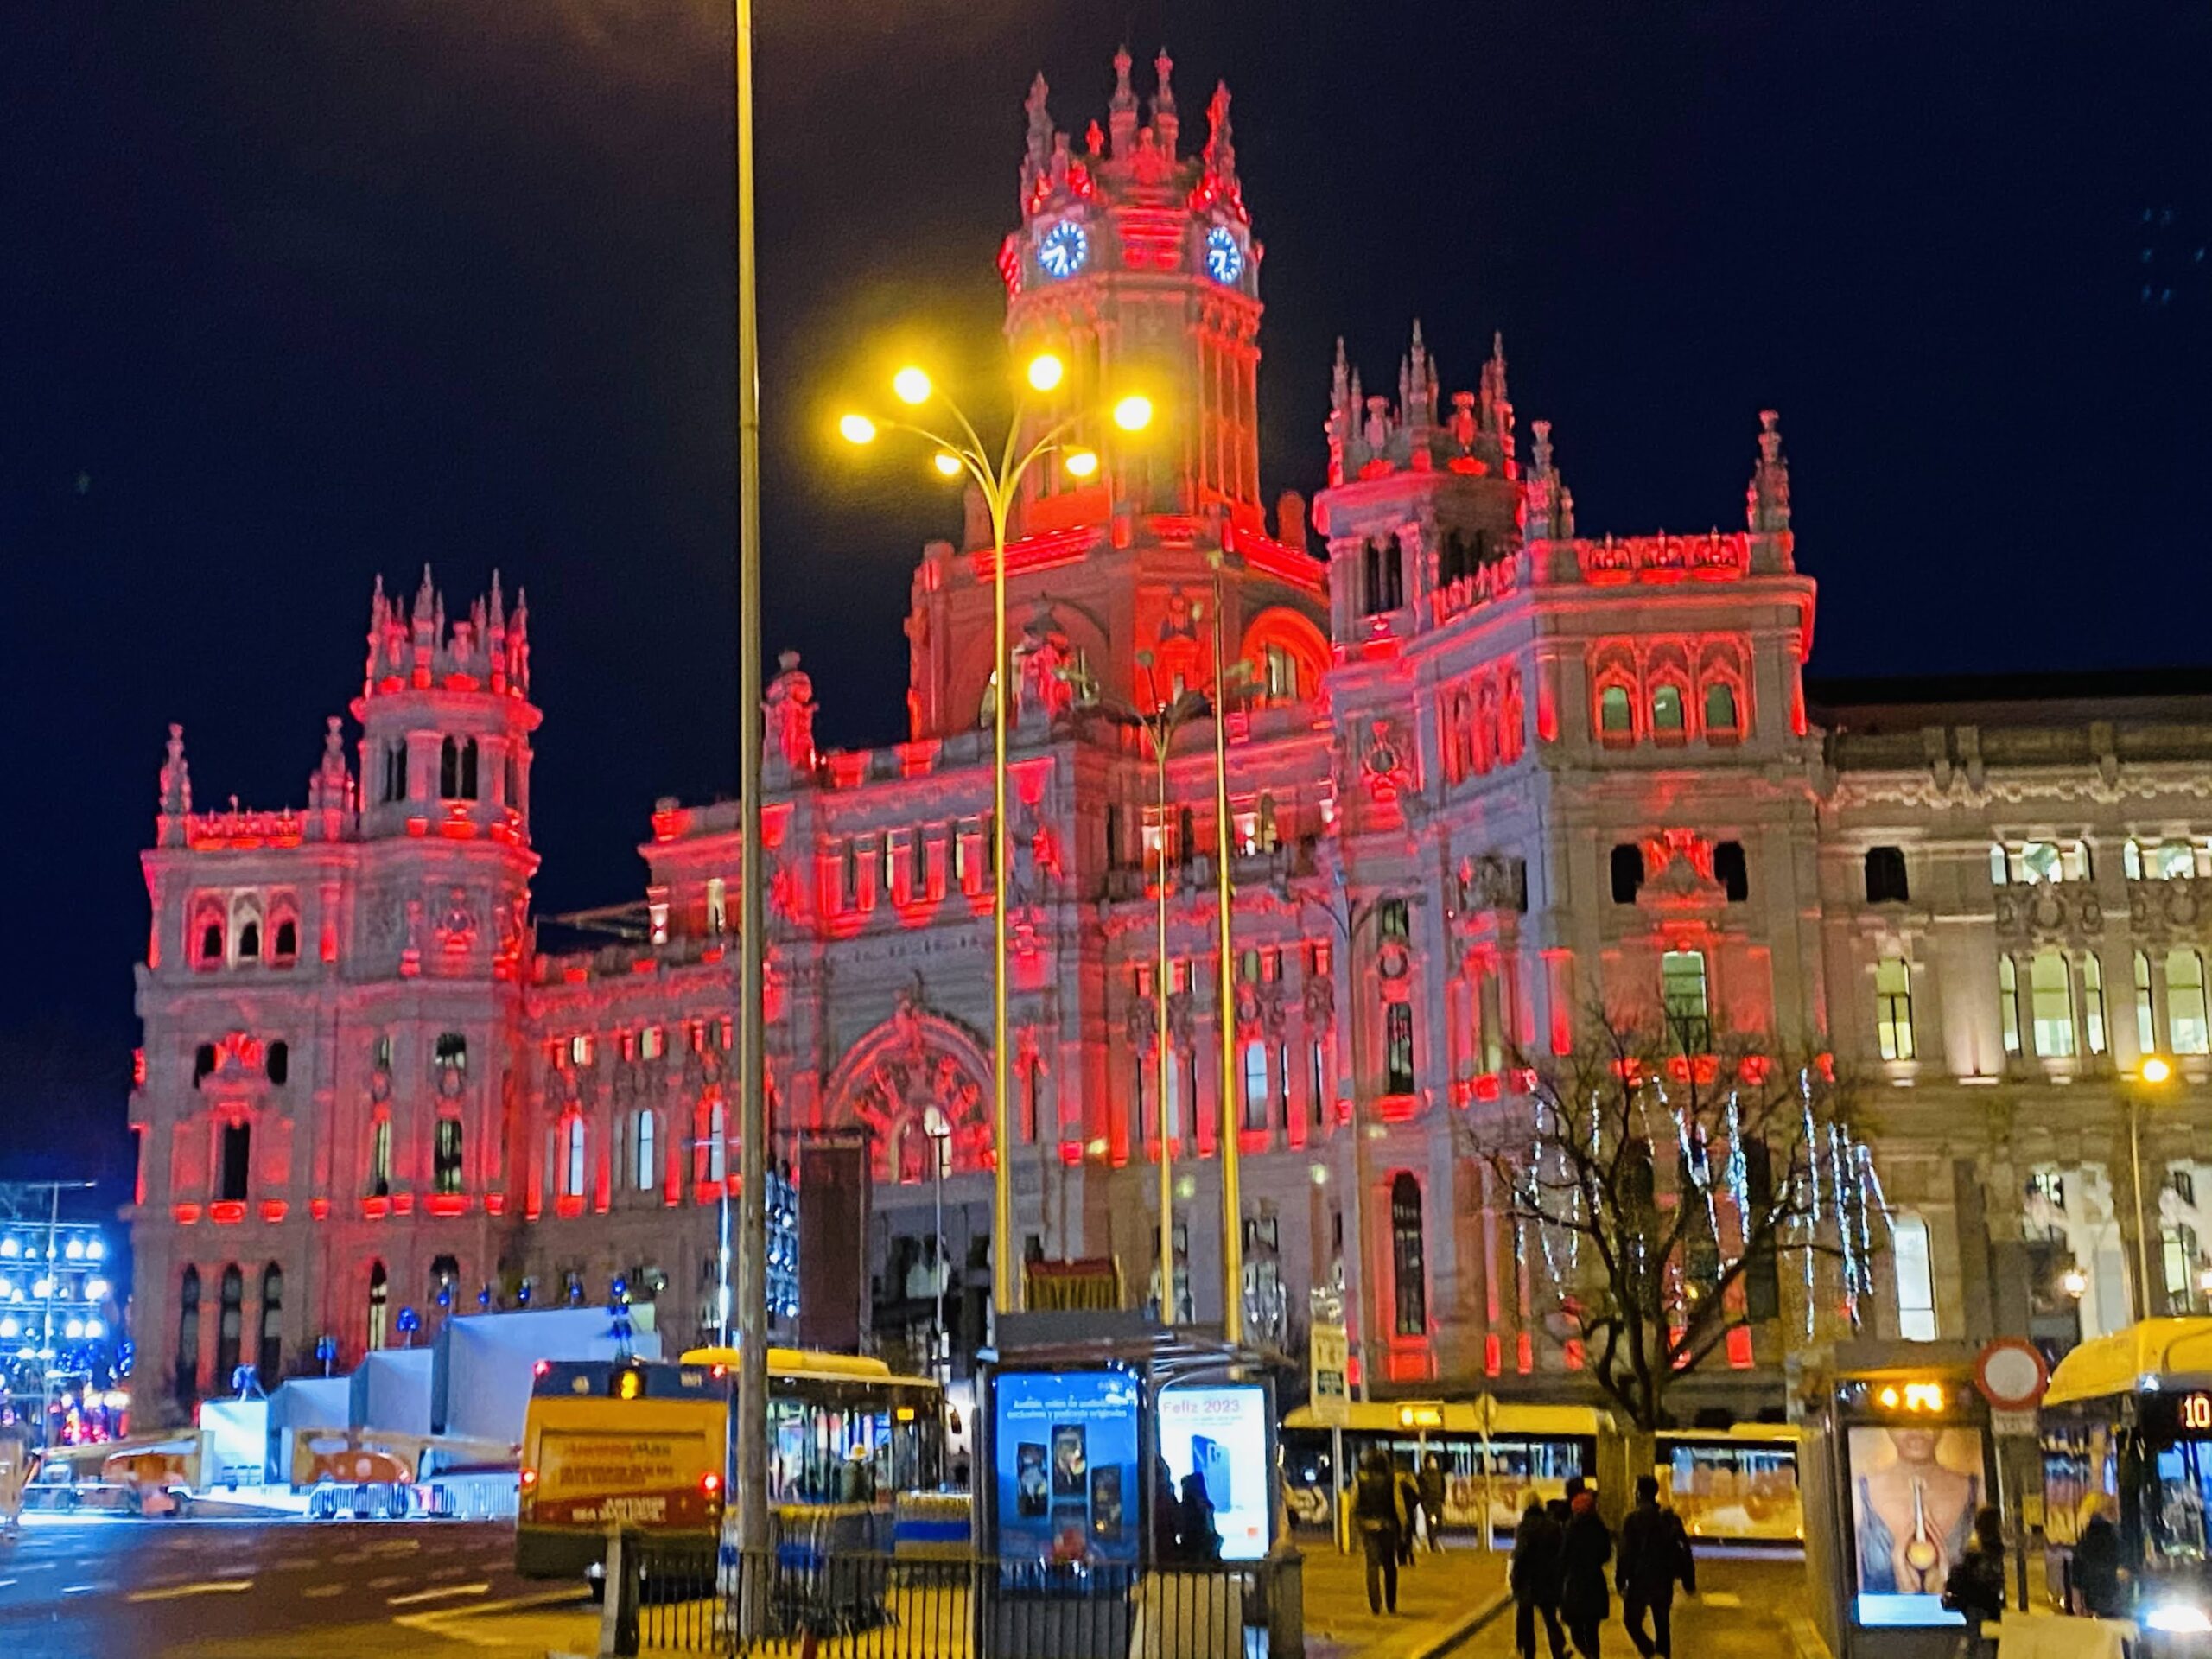 Madrid in lights